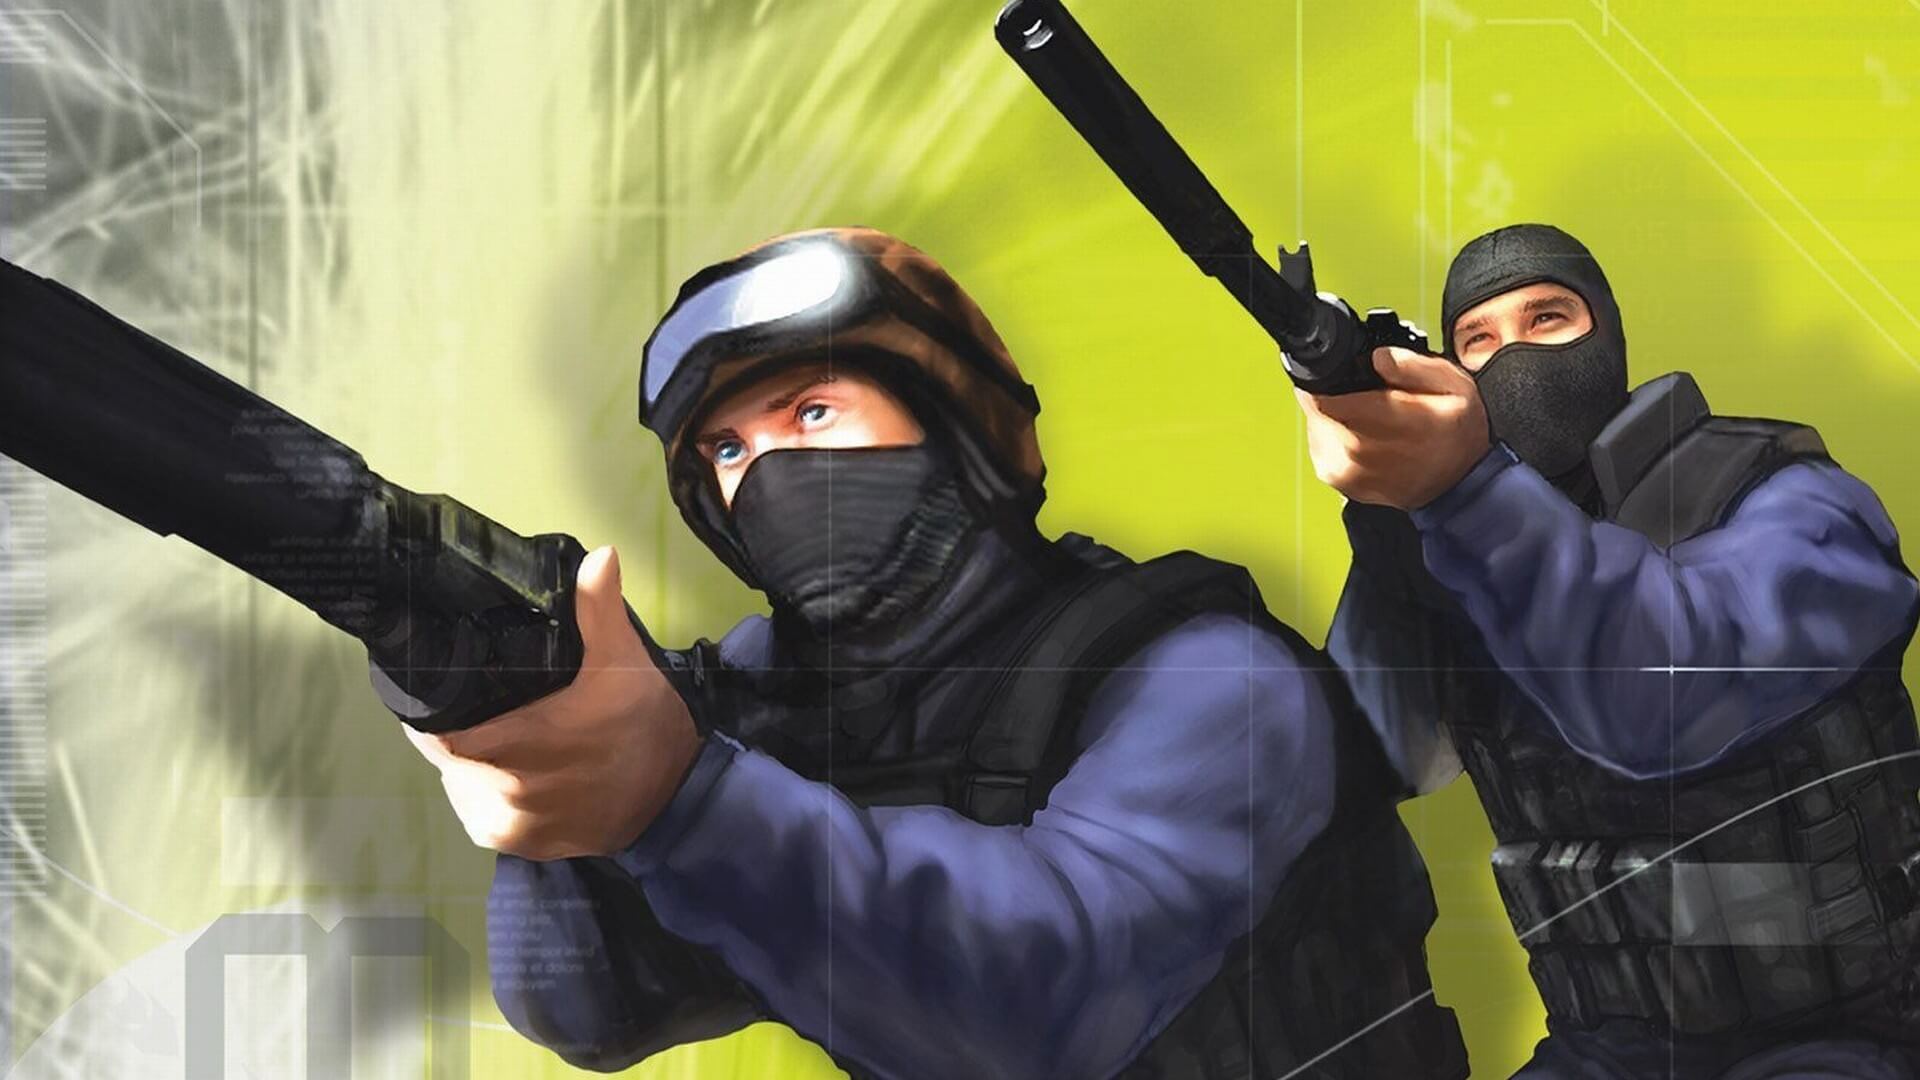 Counter Strike Condition Zero - Free Download PC Game (Full Version)